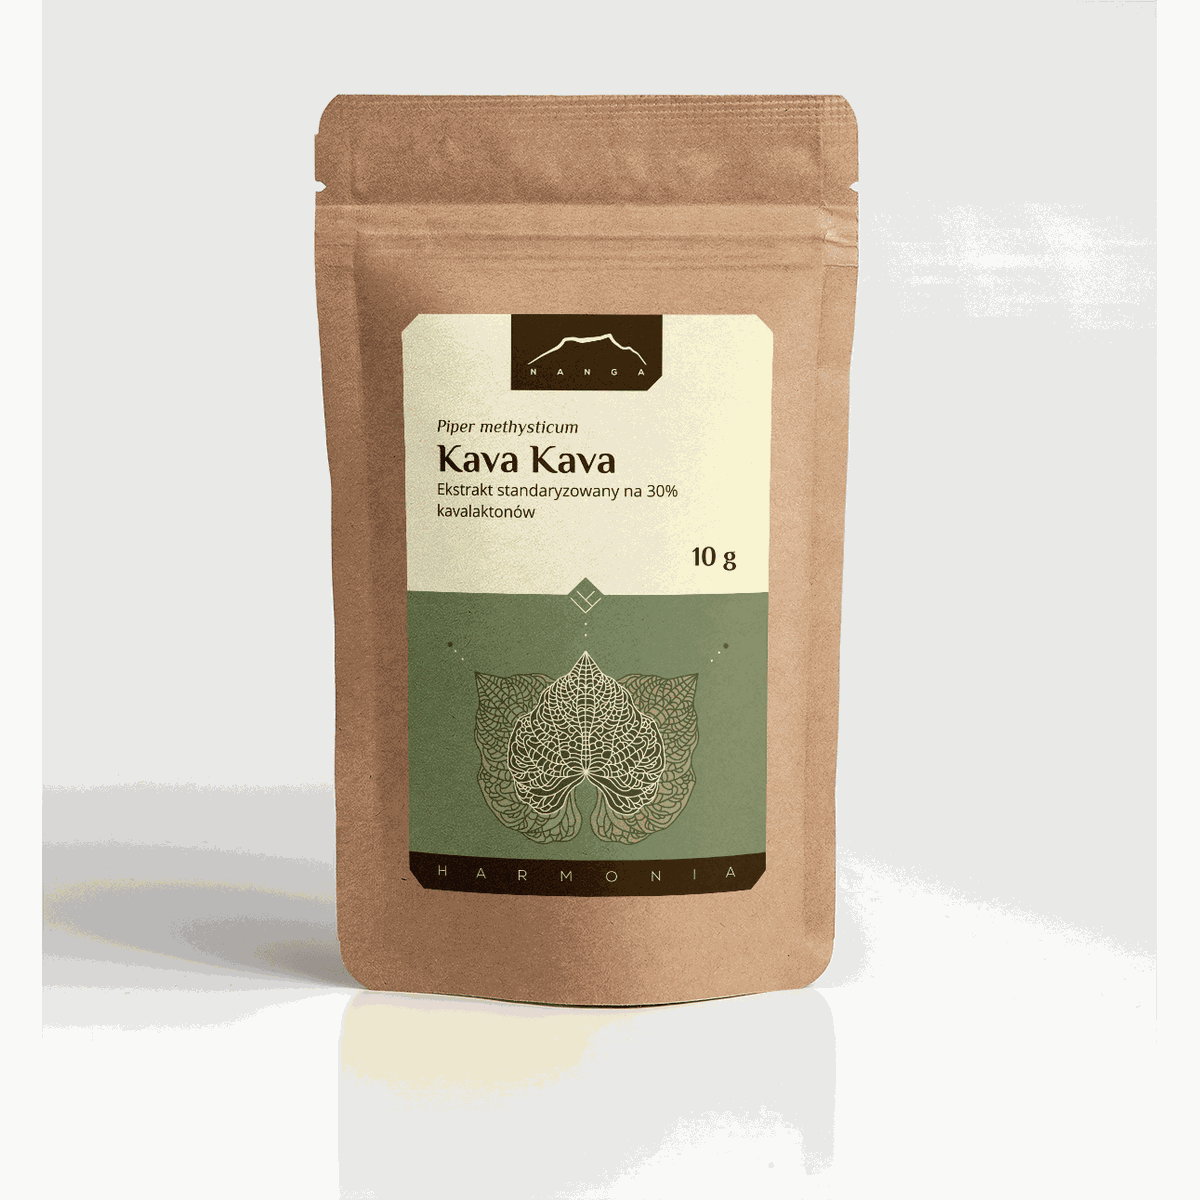 Kava kava ekstrakt standaryzowany na 30% kavalaktonów